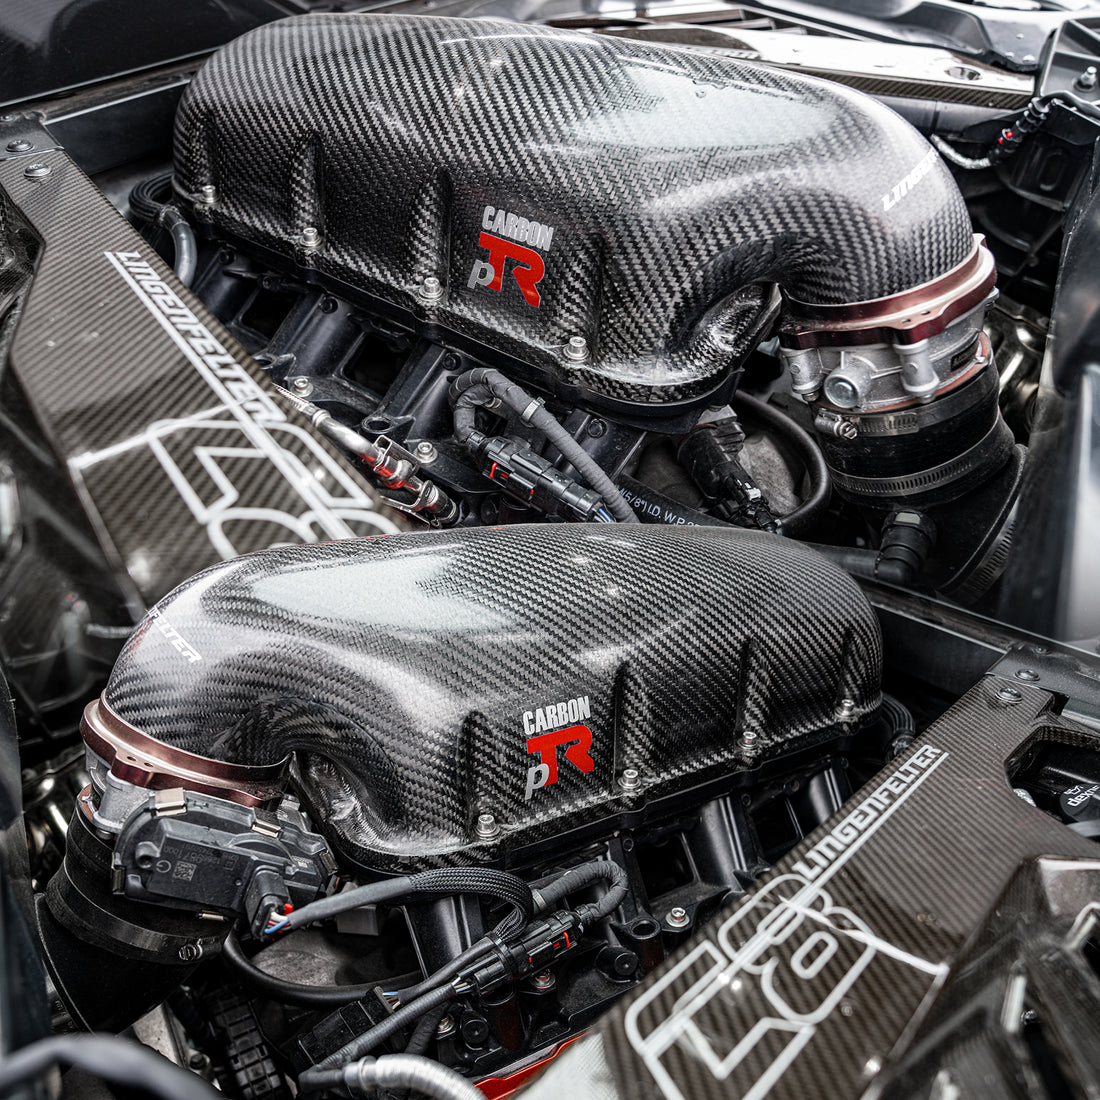 Performance Design C8 LT2 Corvette Carbon pTR Intake Manifold